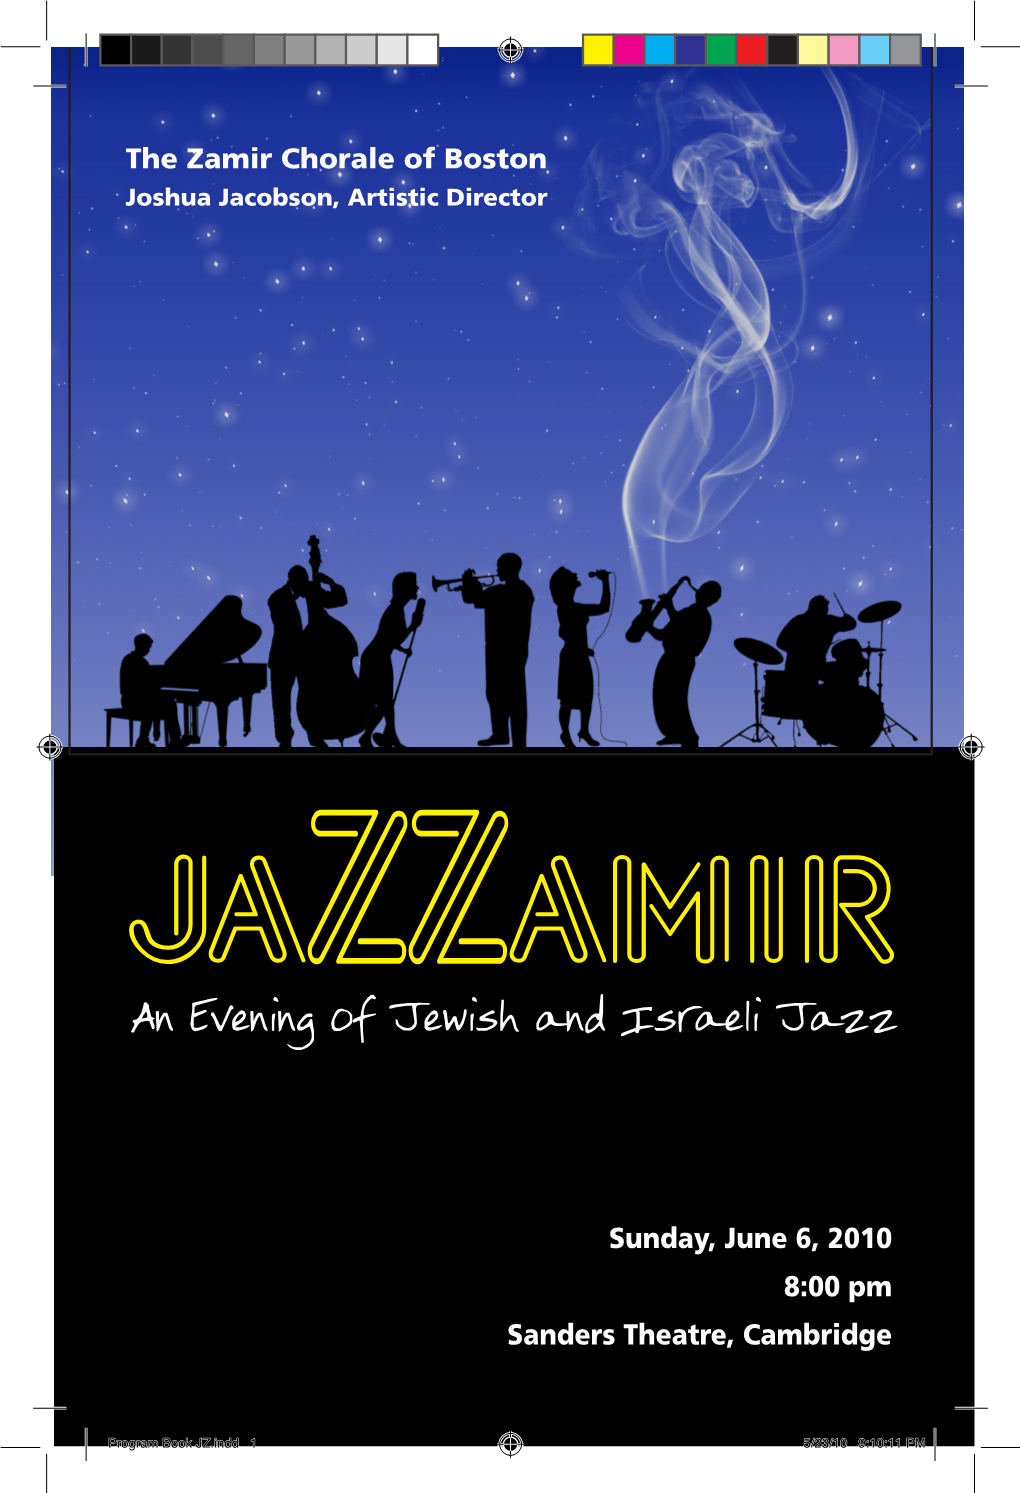 An Evening of Jewish and Israeli Jazz